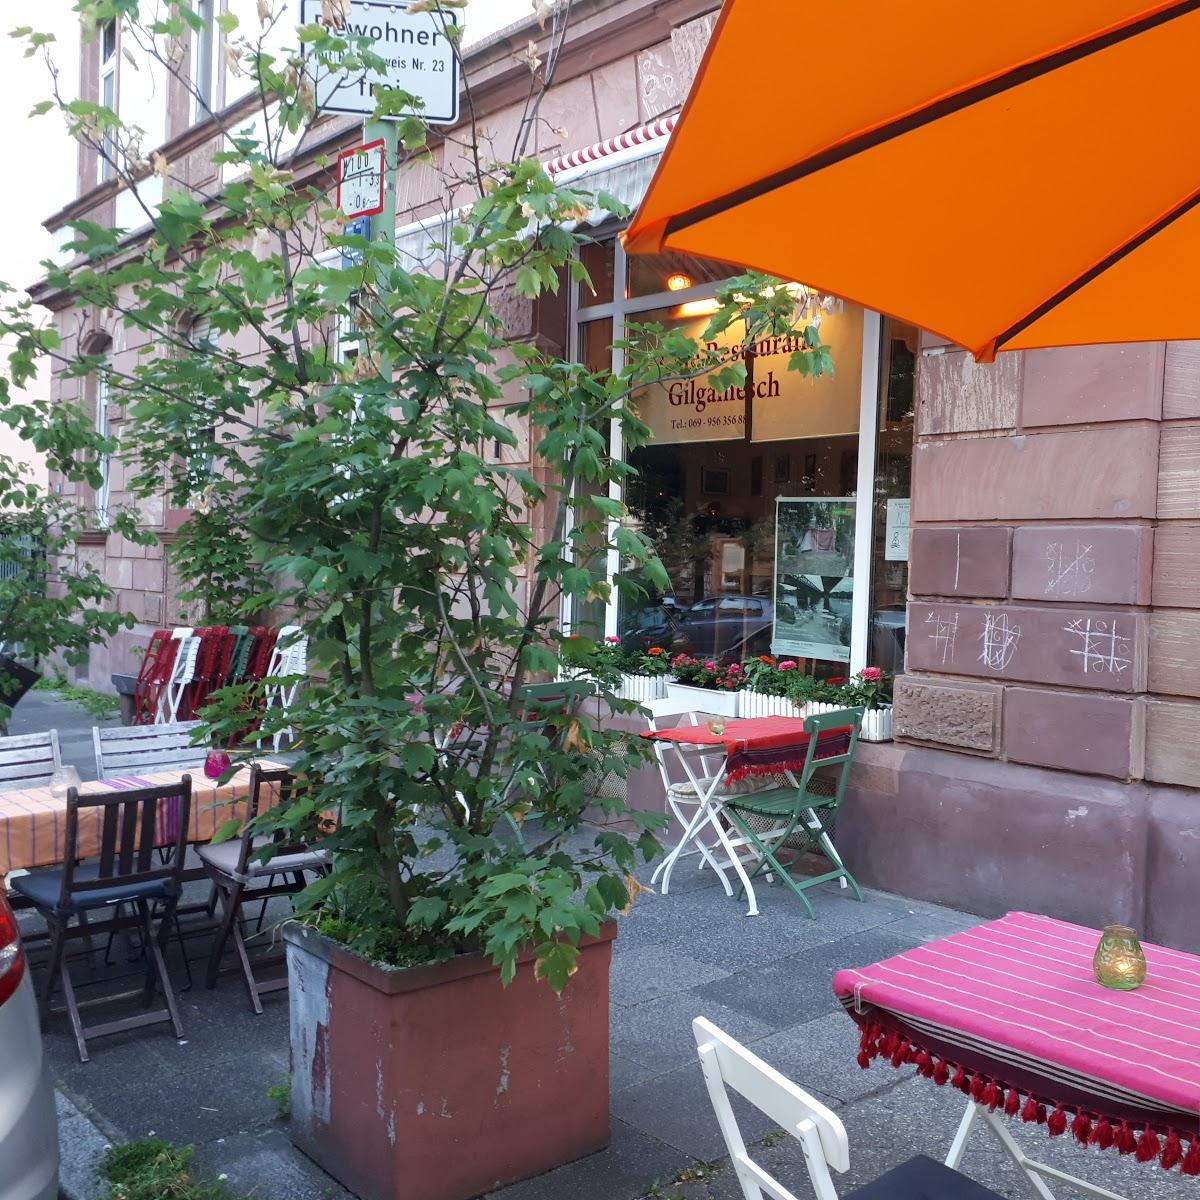 Restaurant "Gilgamesch" in Frankfurt am Main